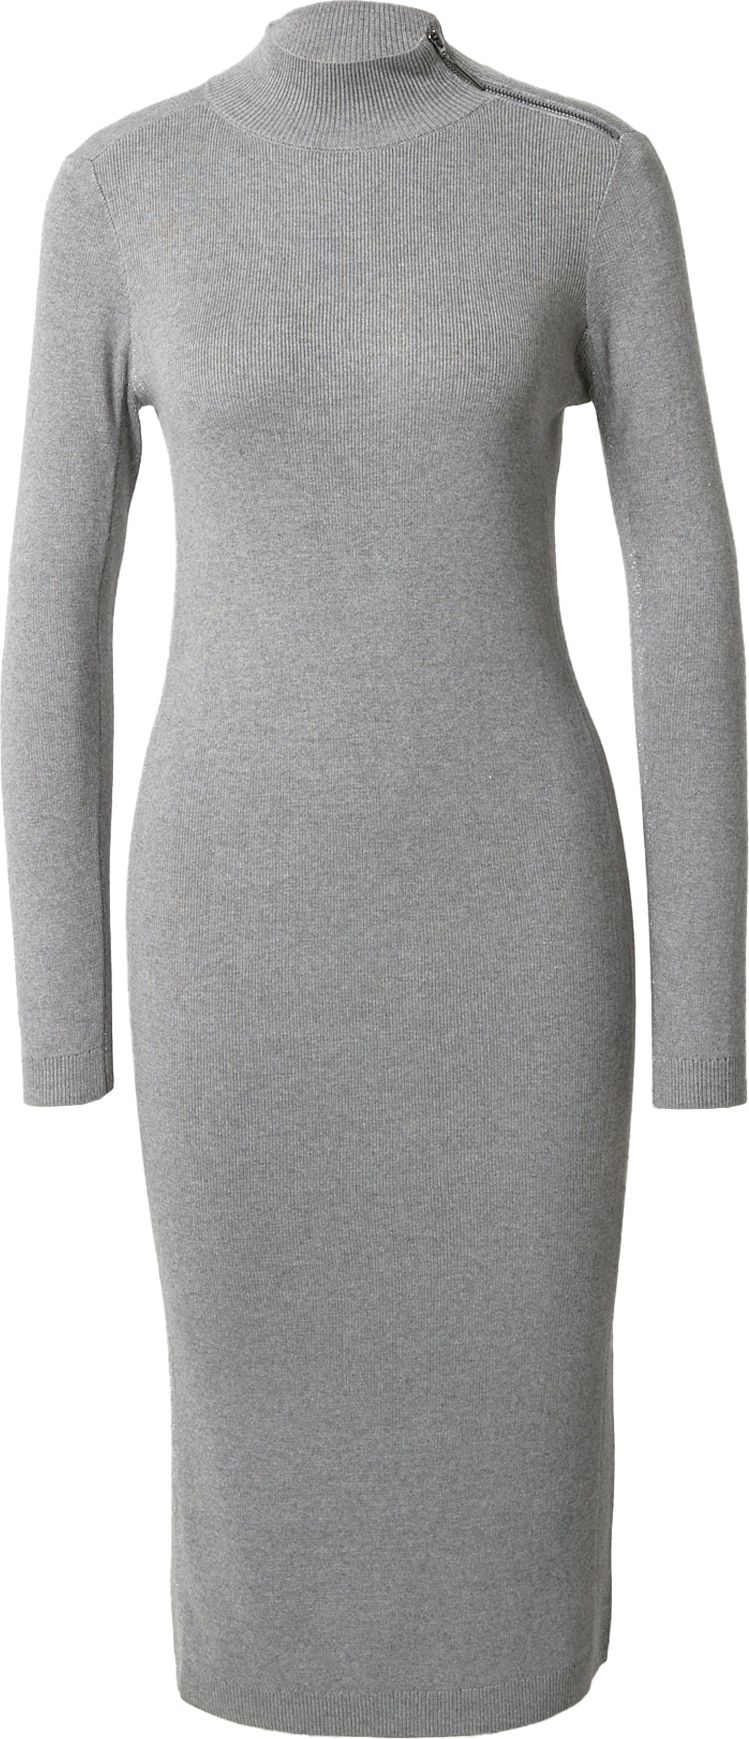 COMMA Úpletové šaty šedý melír